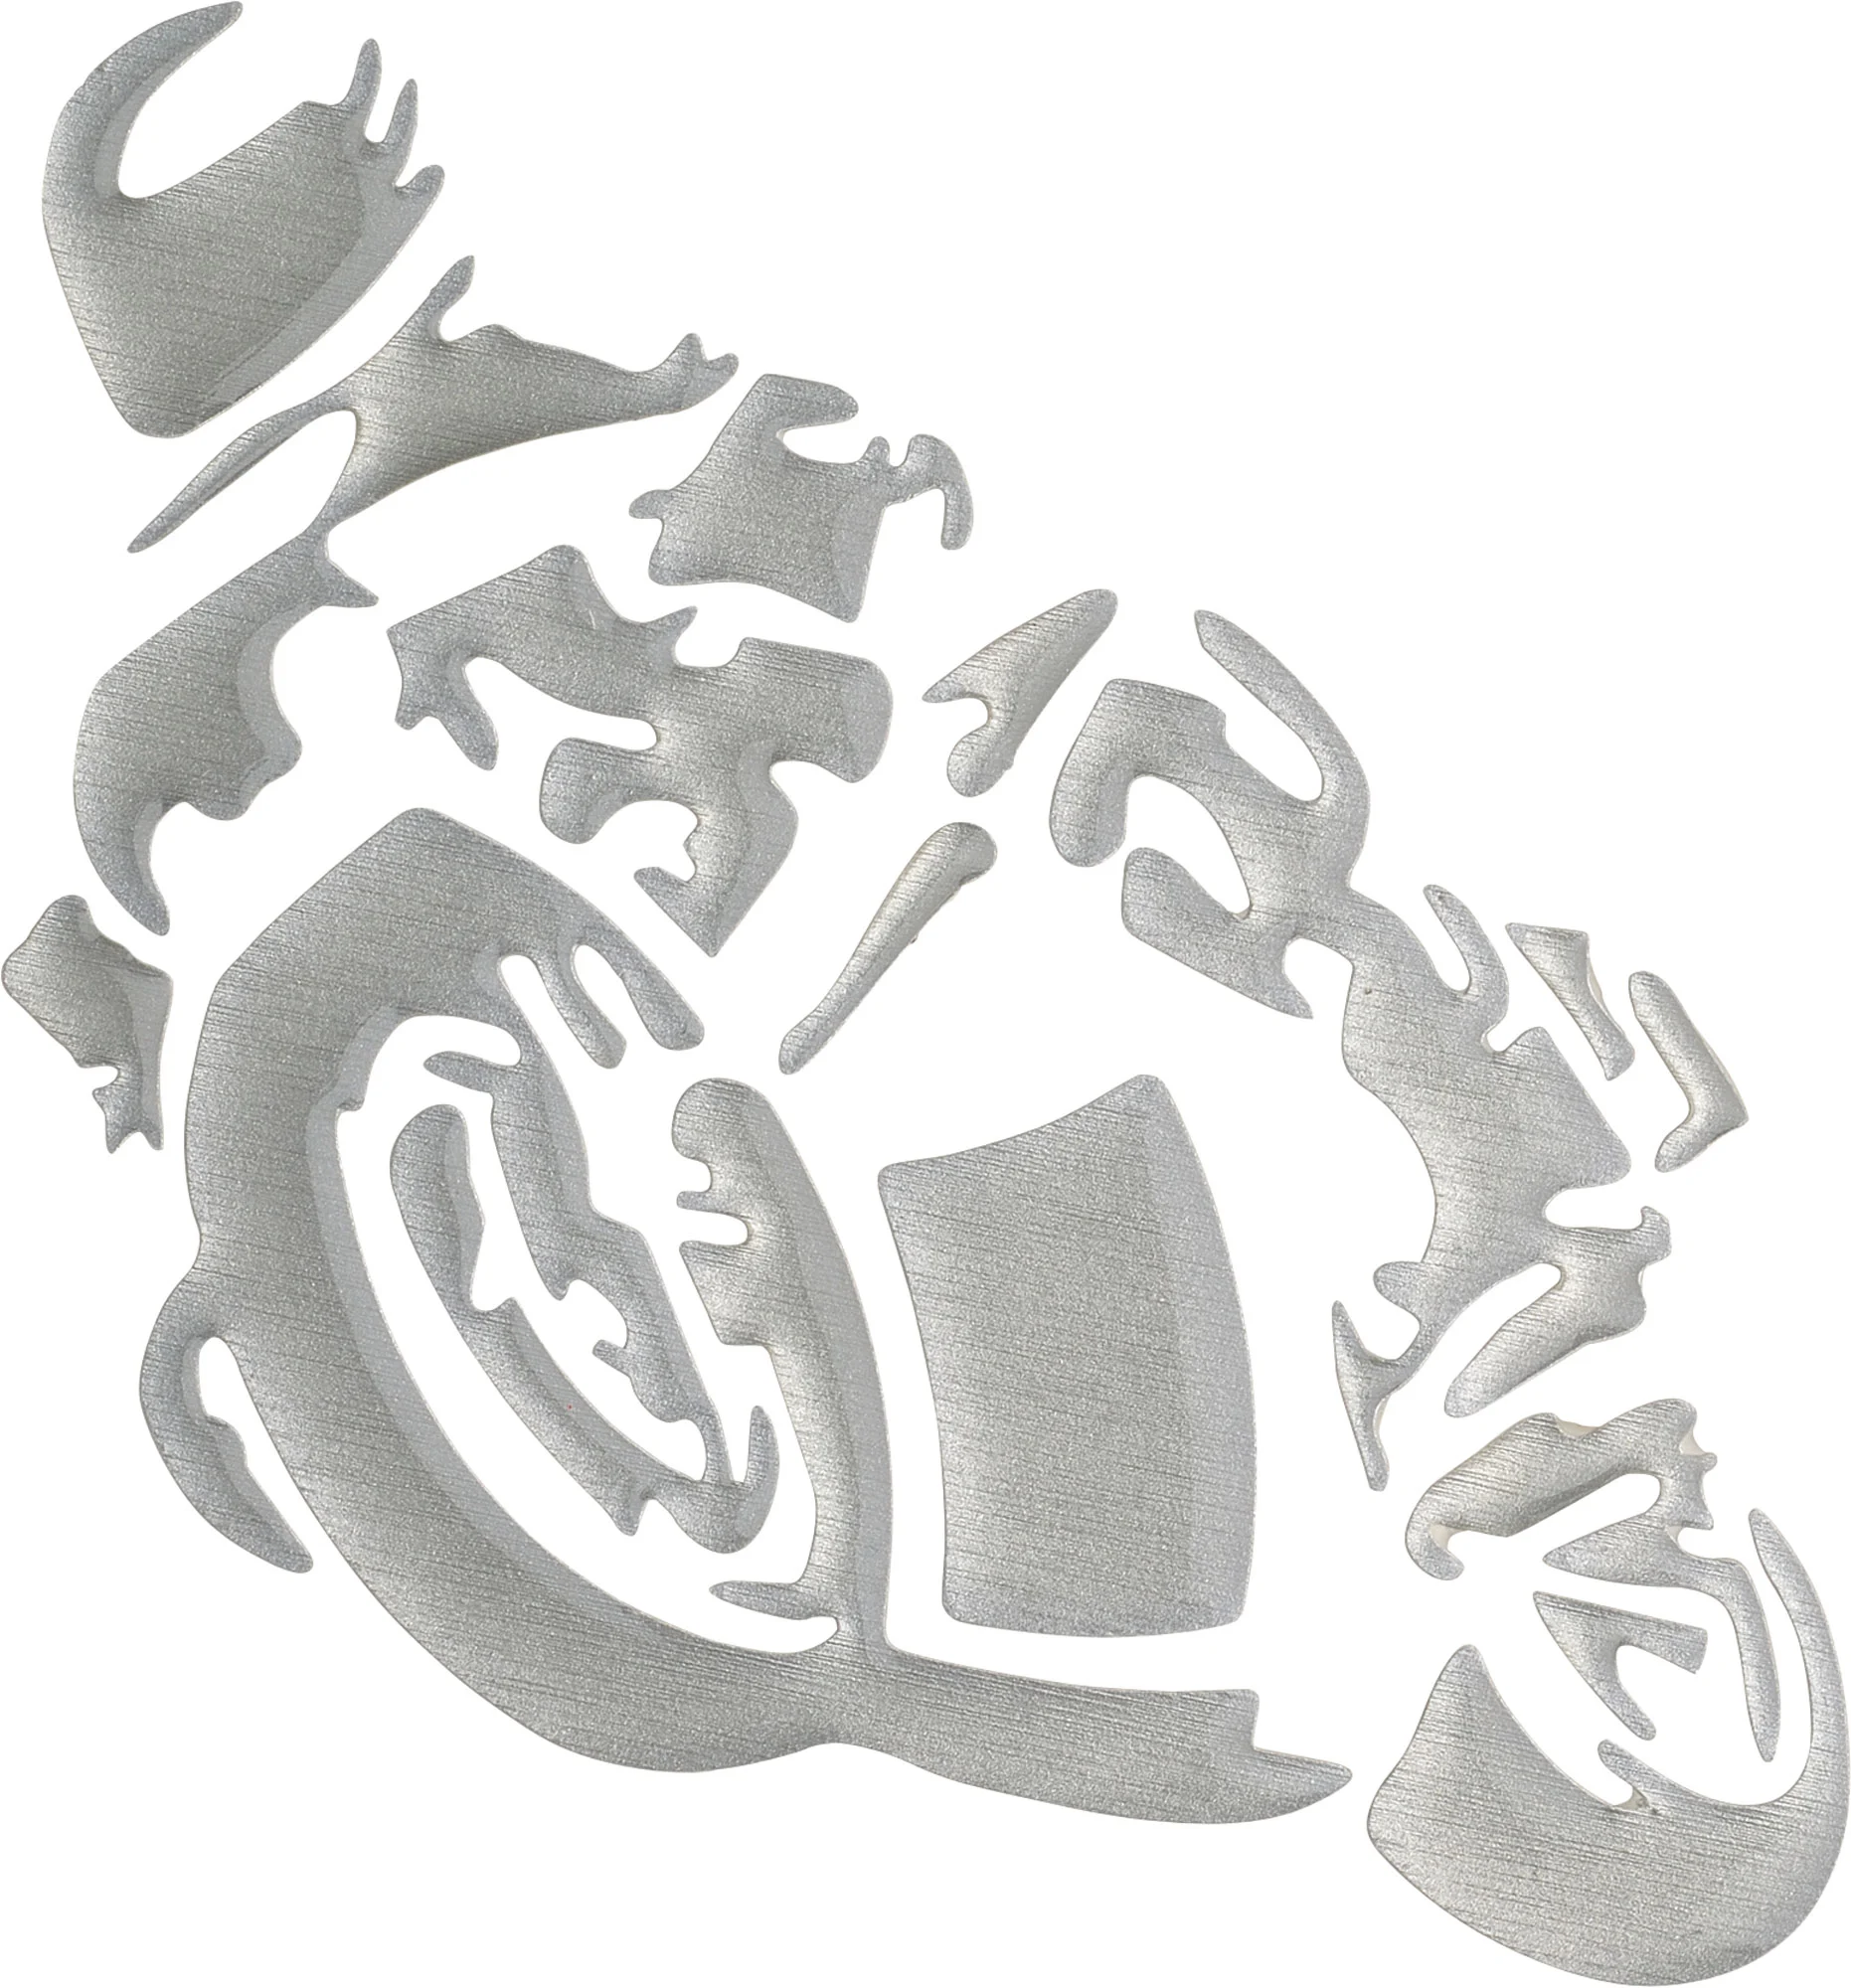 Louis 3D Aufkleber Motorrad Maße: 12x9cm, schwarz